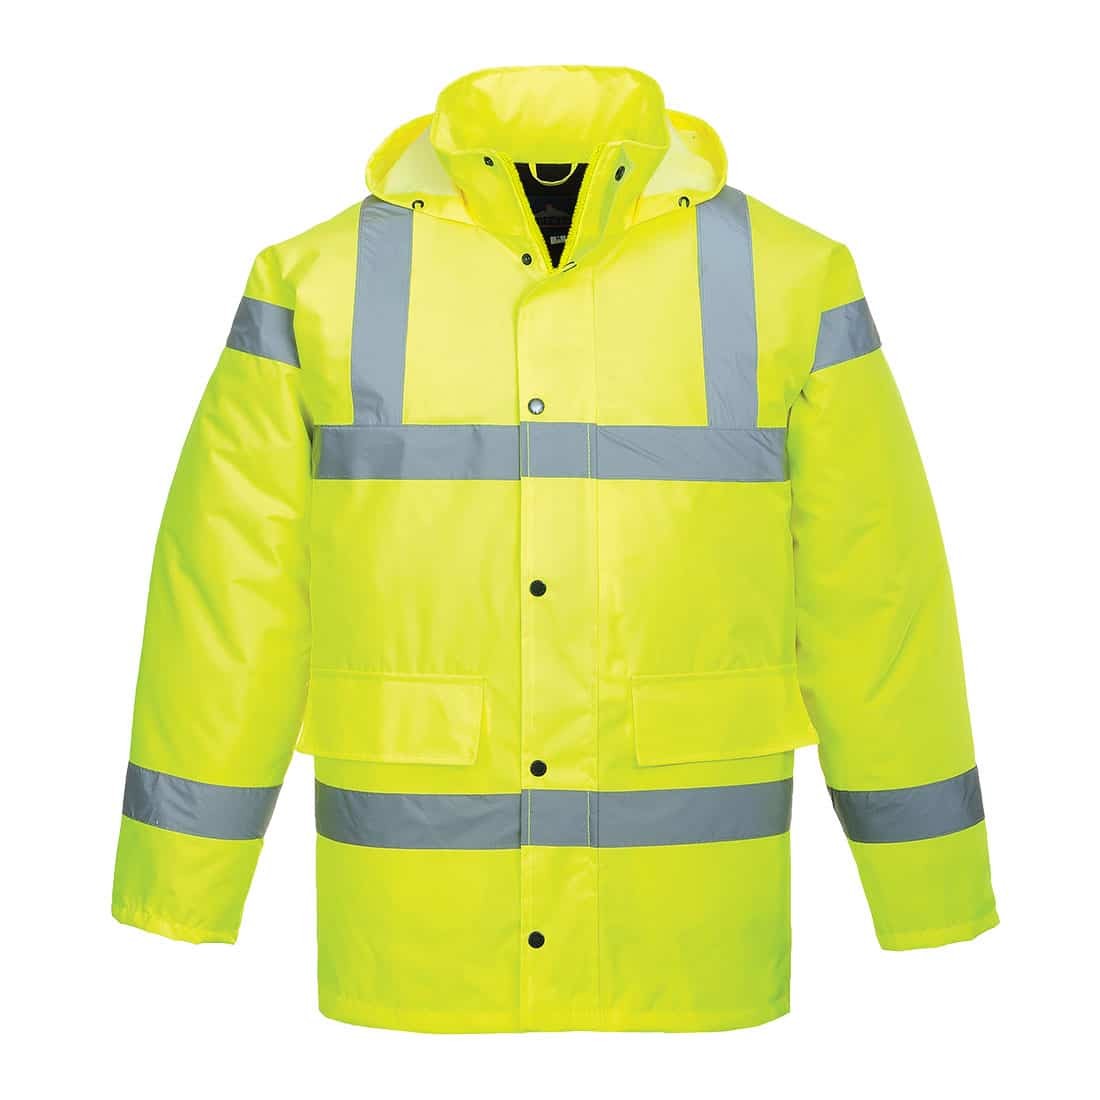 Portwest Hi-Vis Winter Traffic Jacket - Yellow